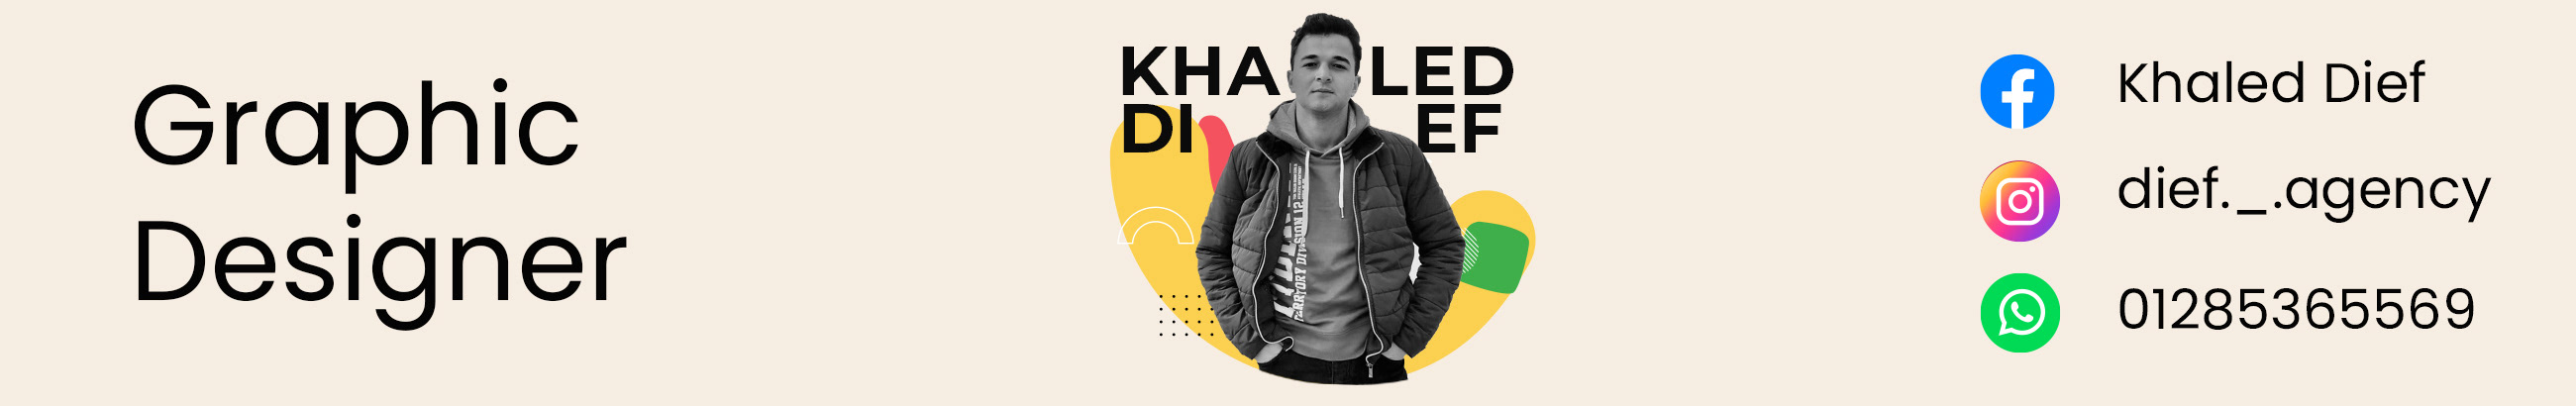 Banner de perfil de Khaled Dief